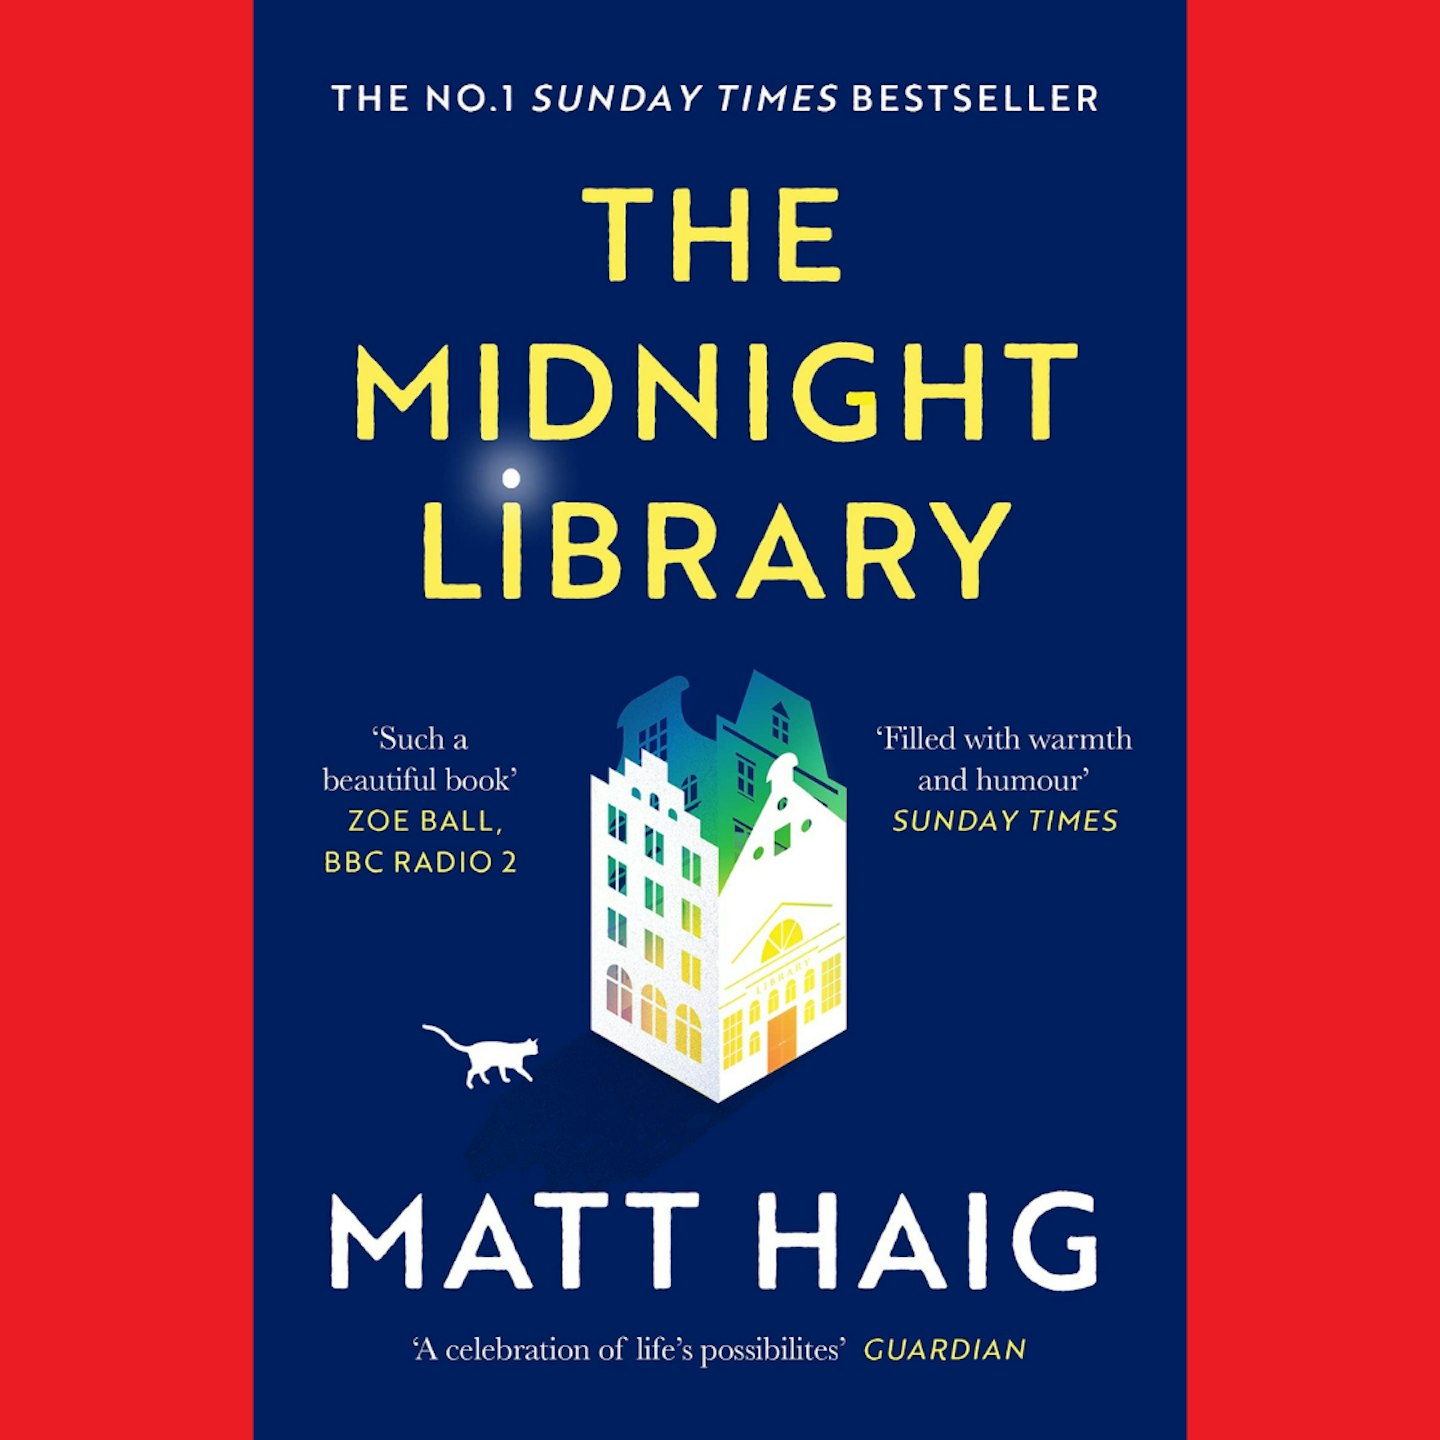 #BookTok The Midnight Library by Matt Haig